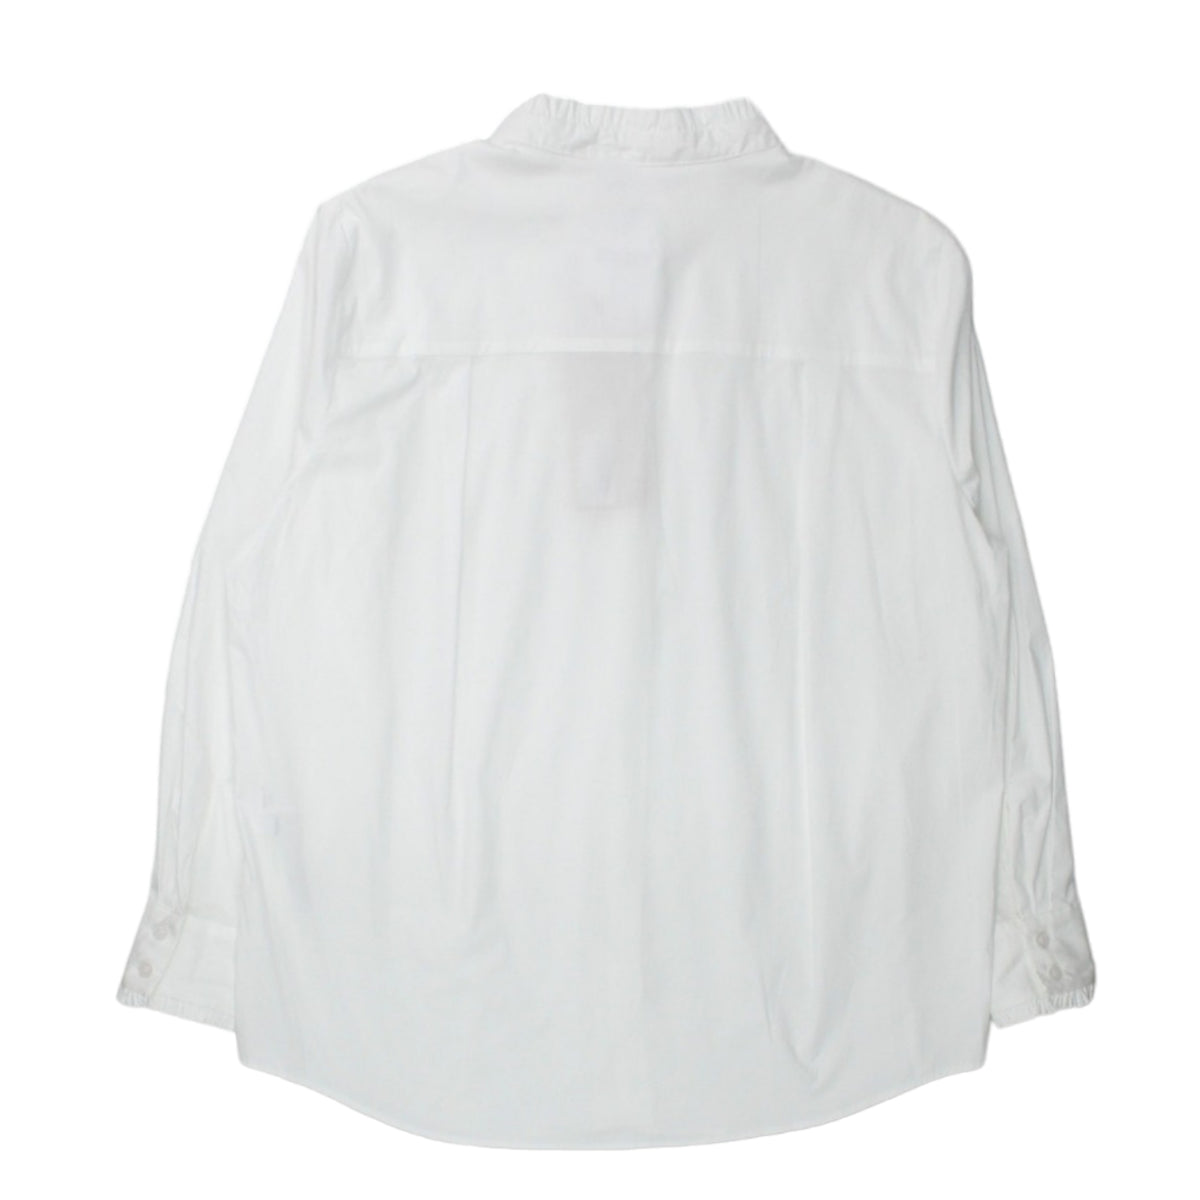 Finery White Megan Shirt